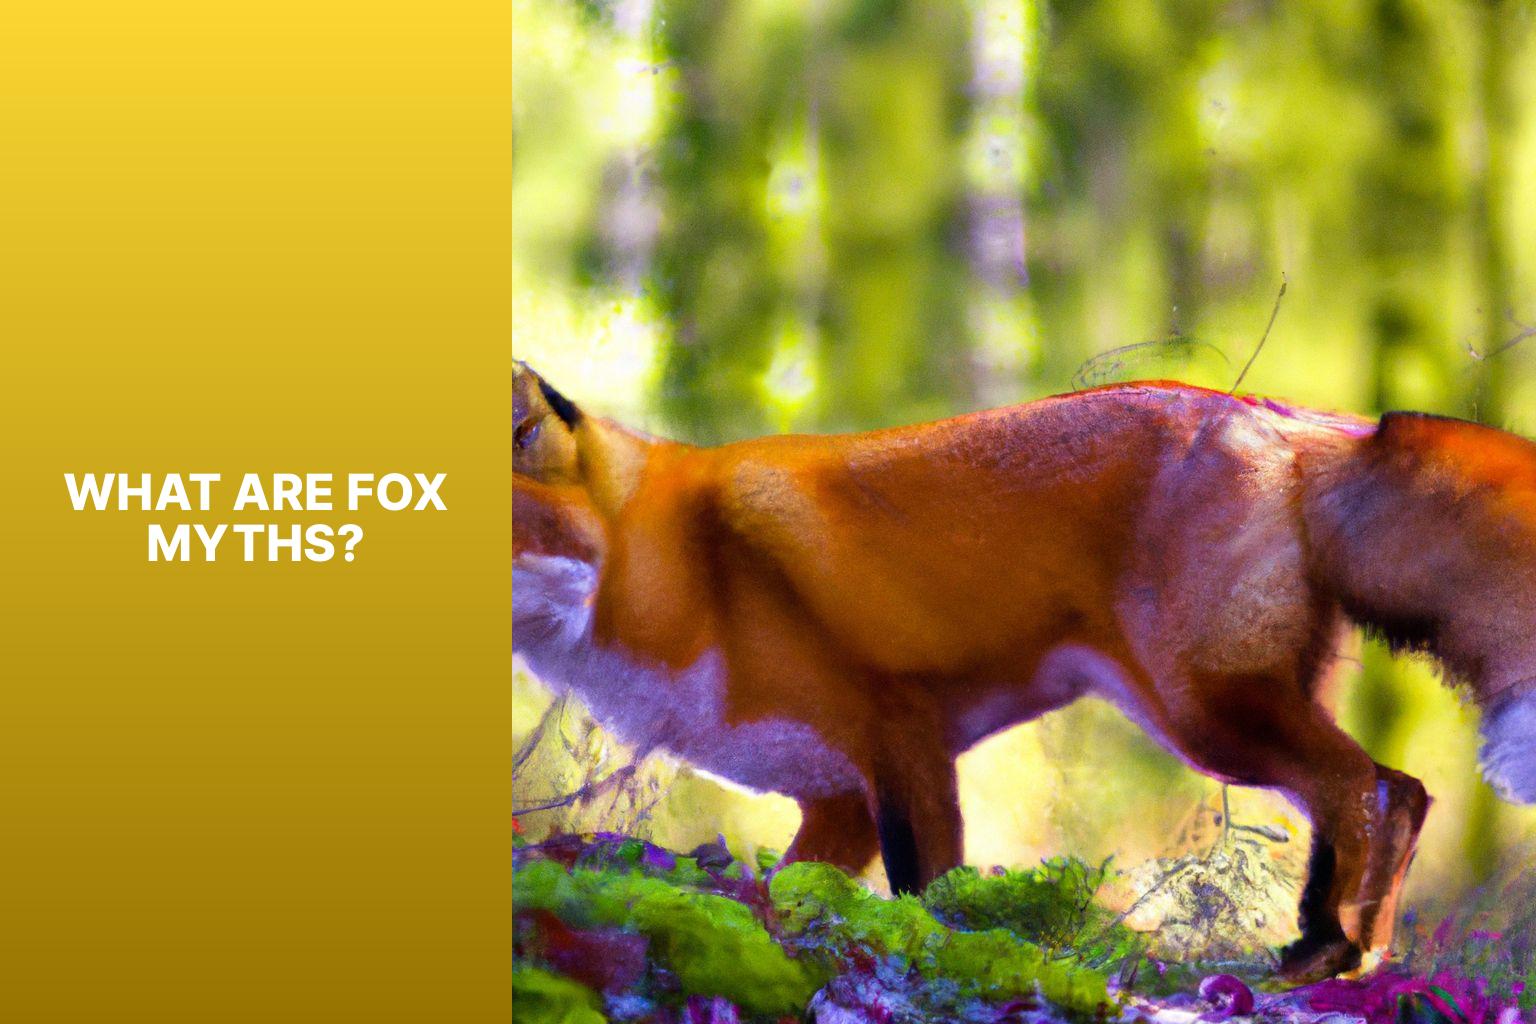 What Are Fox Myths? - Fox Myths in Monism 